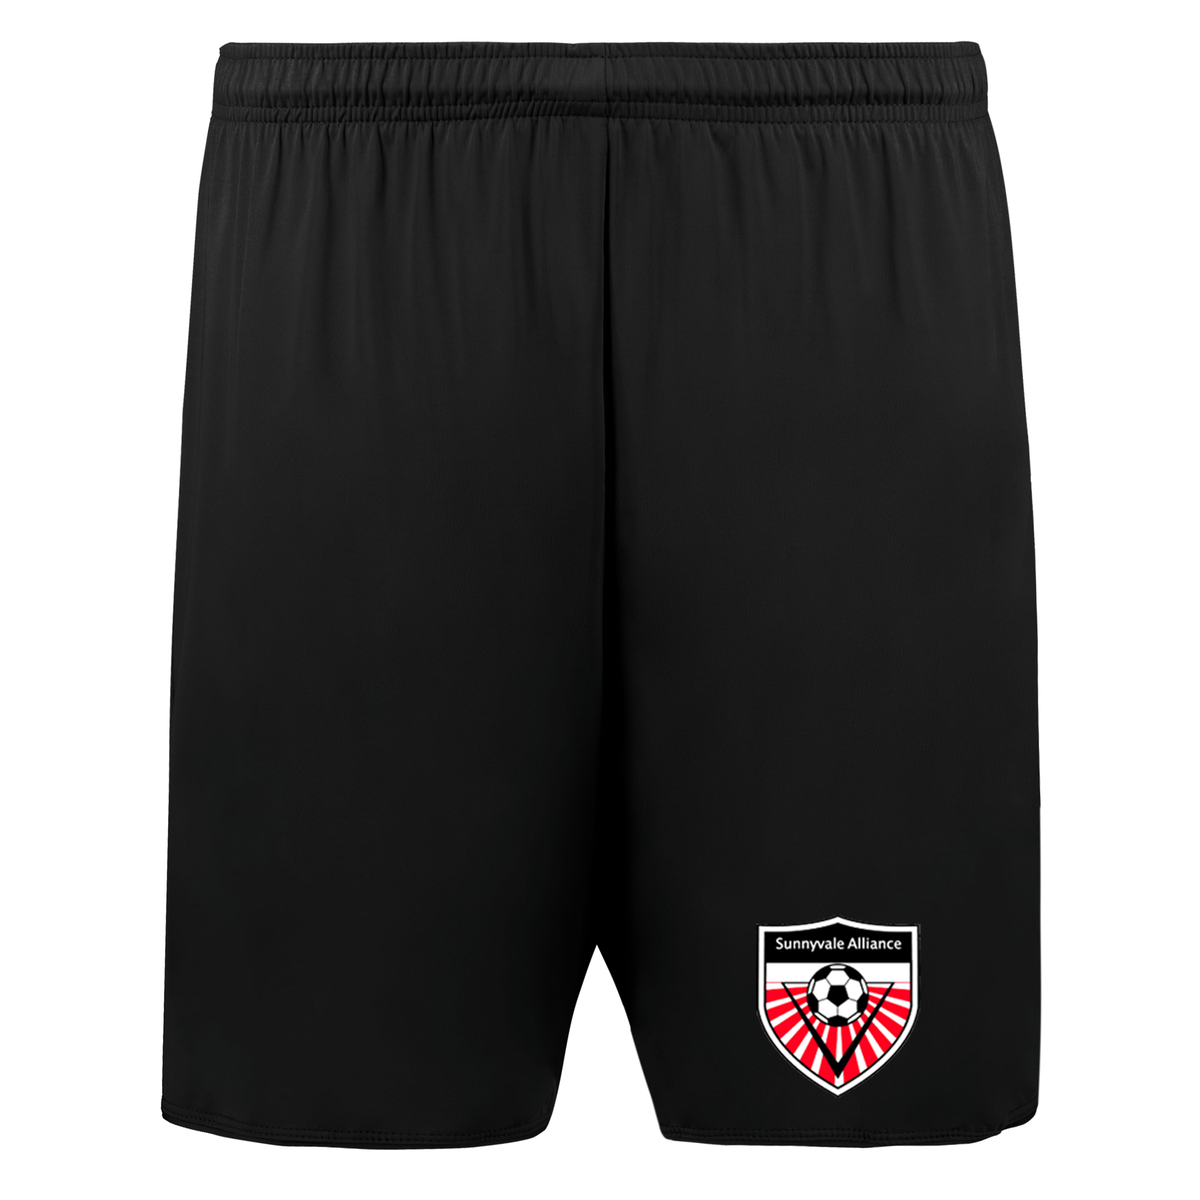 Sunnyvale Alliance Play90 Coolcore Soccer Shorts